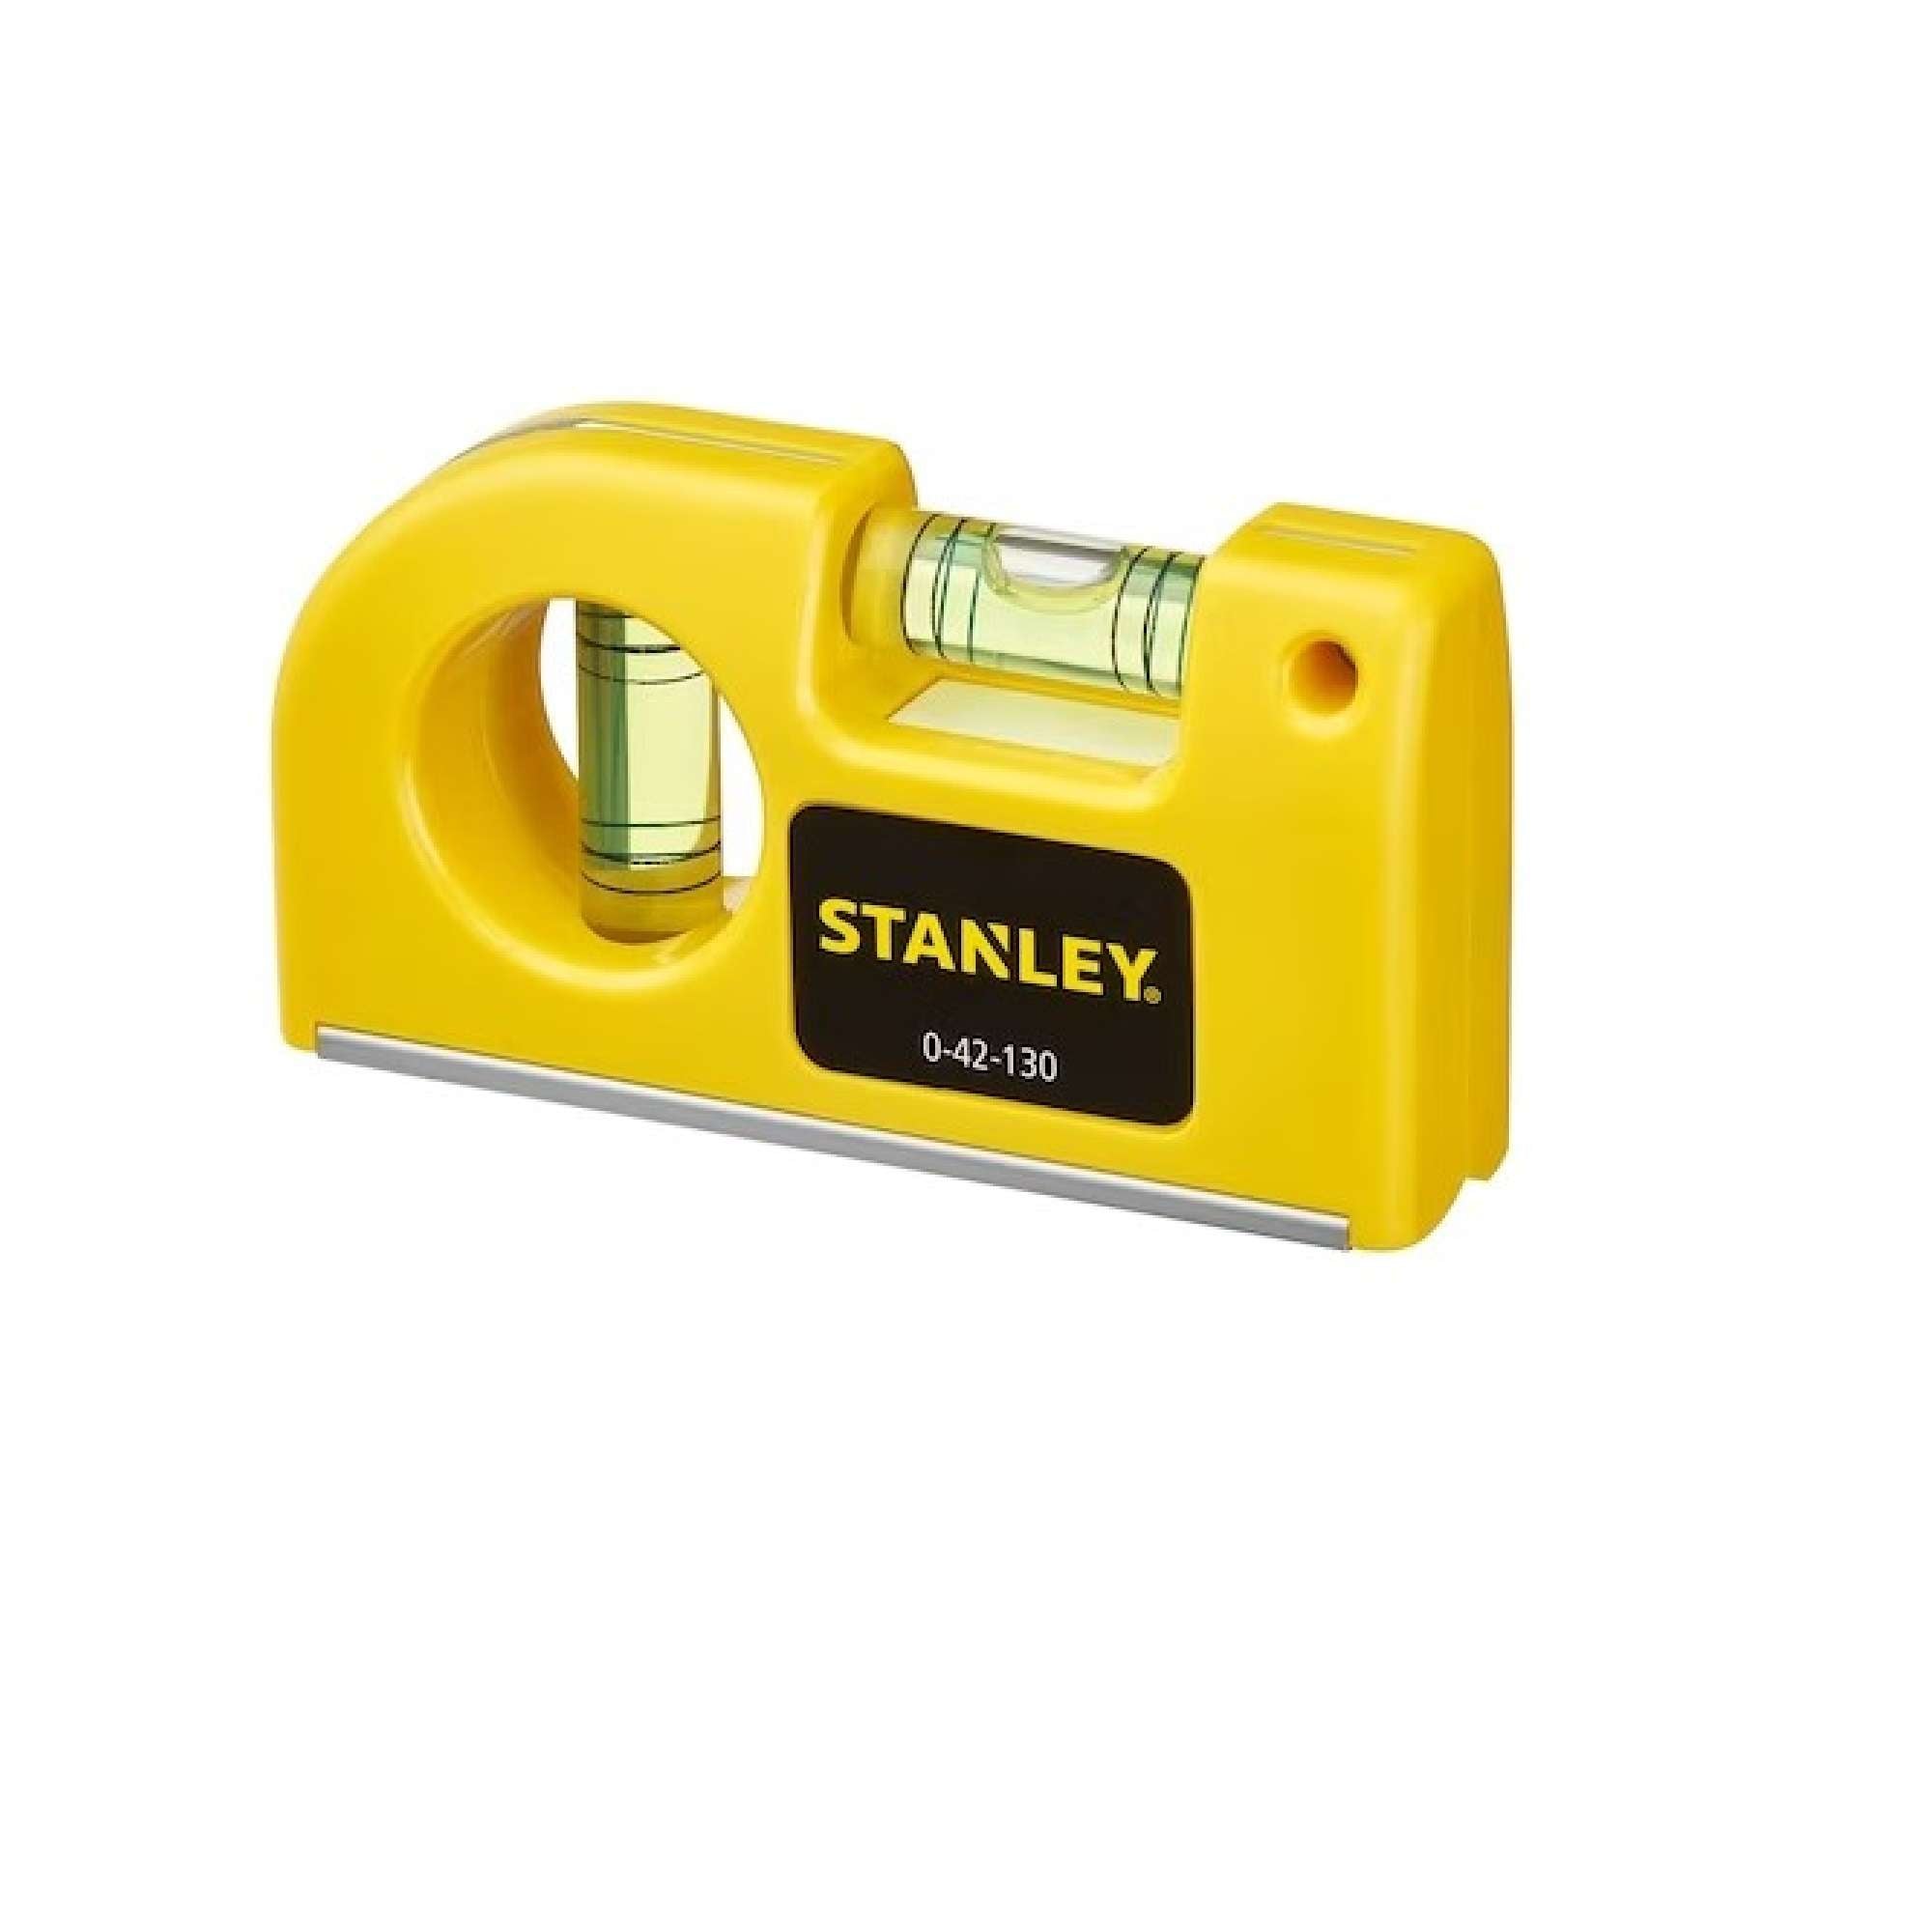 Pocket Spirit Level - Stanley 0-42-130